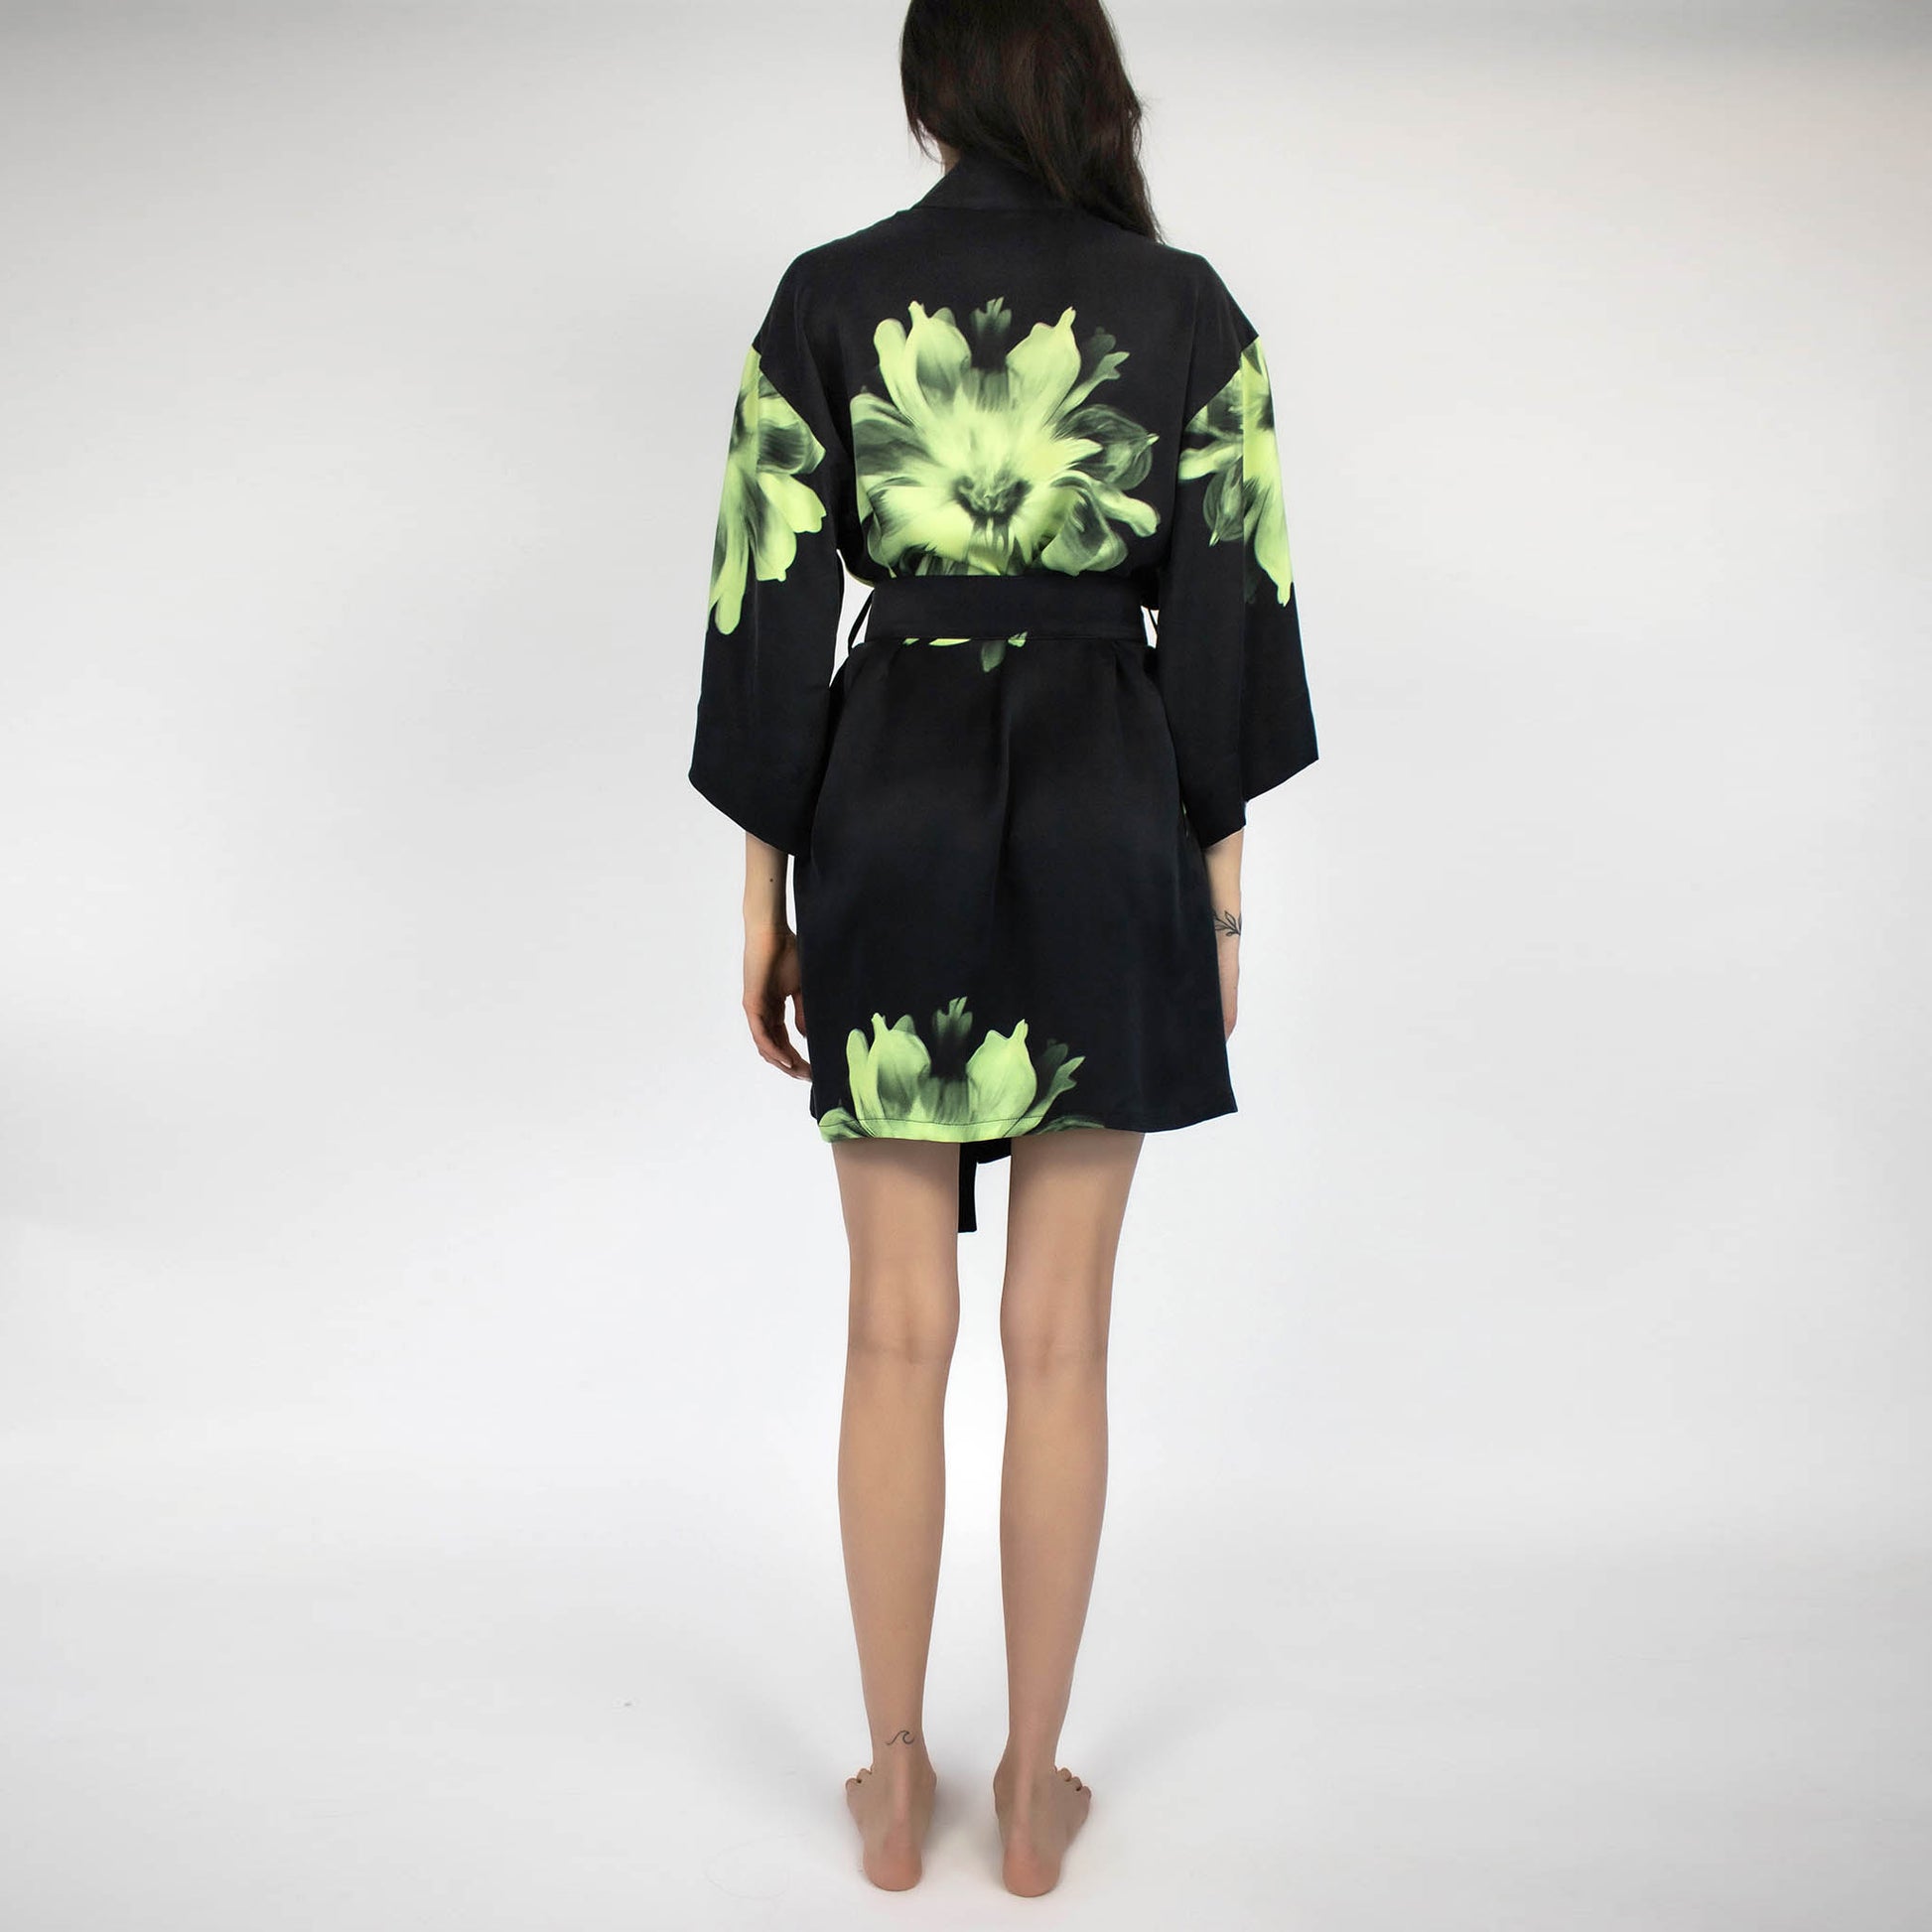 Real Silk women's robe. Back side. Wide belt add en elegant look and comfort